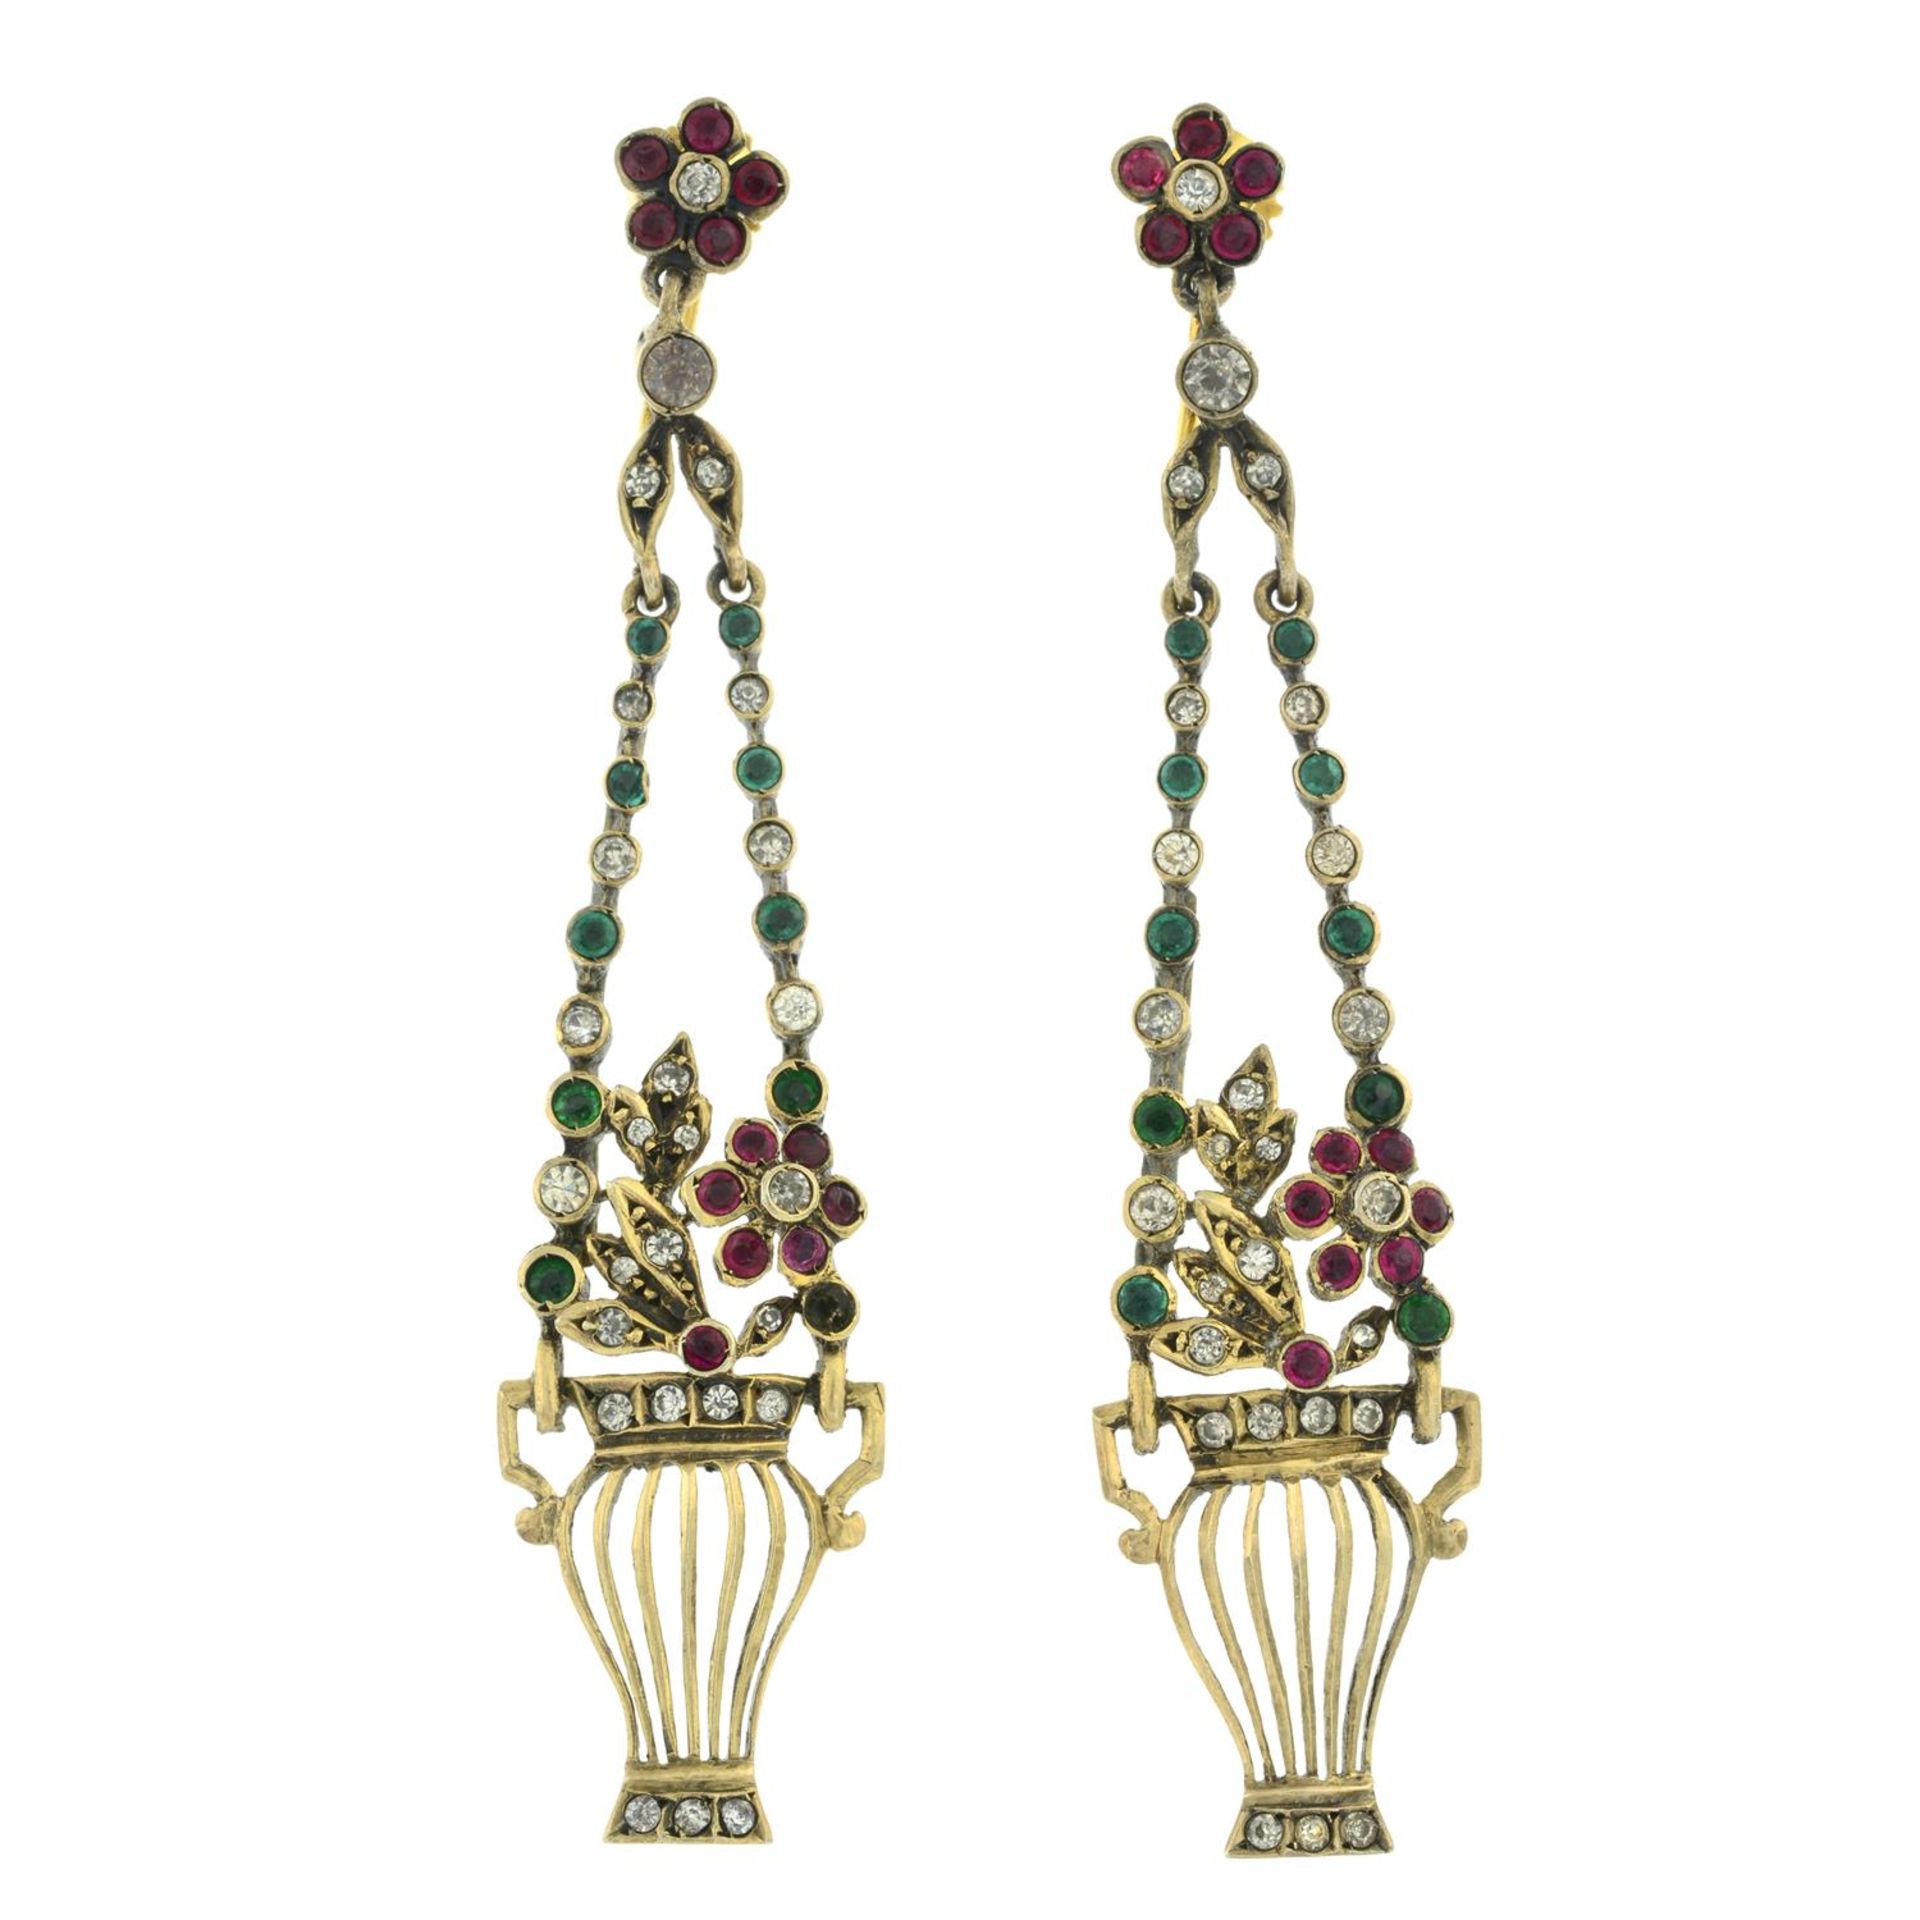 Mid Victorian vari-hue paste earrings